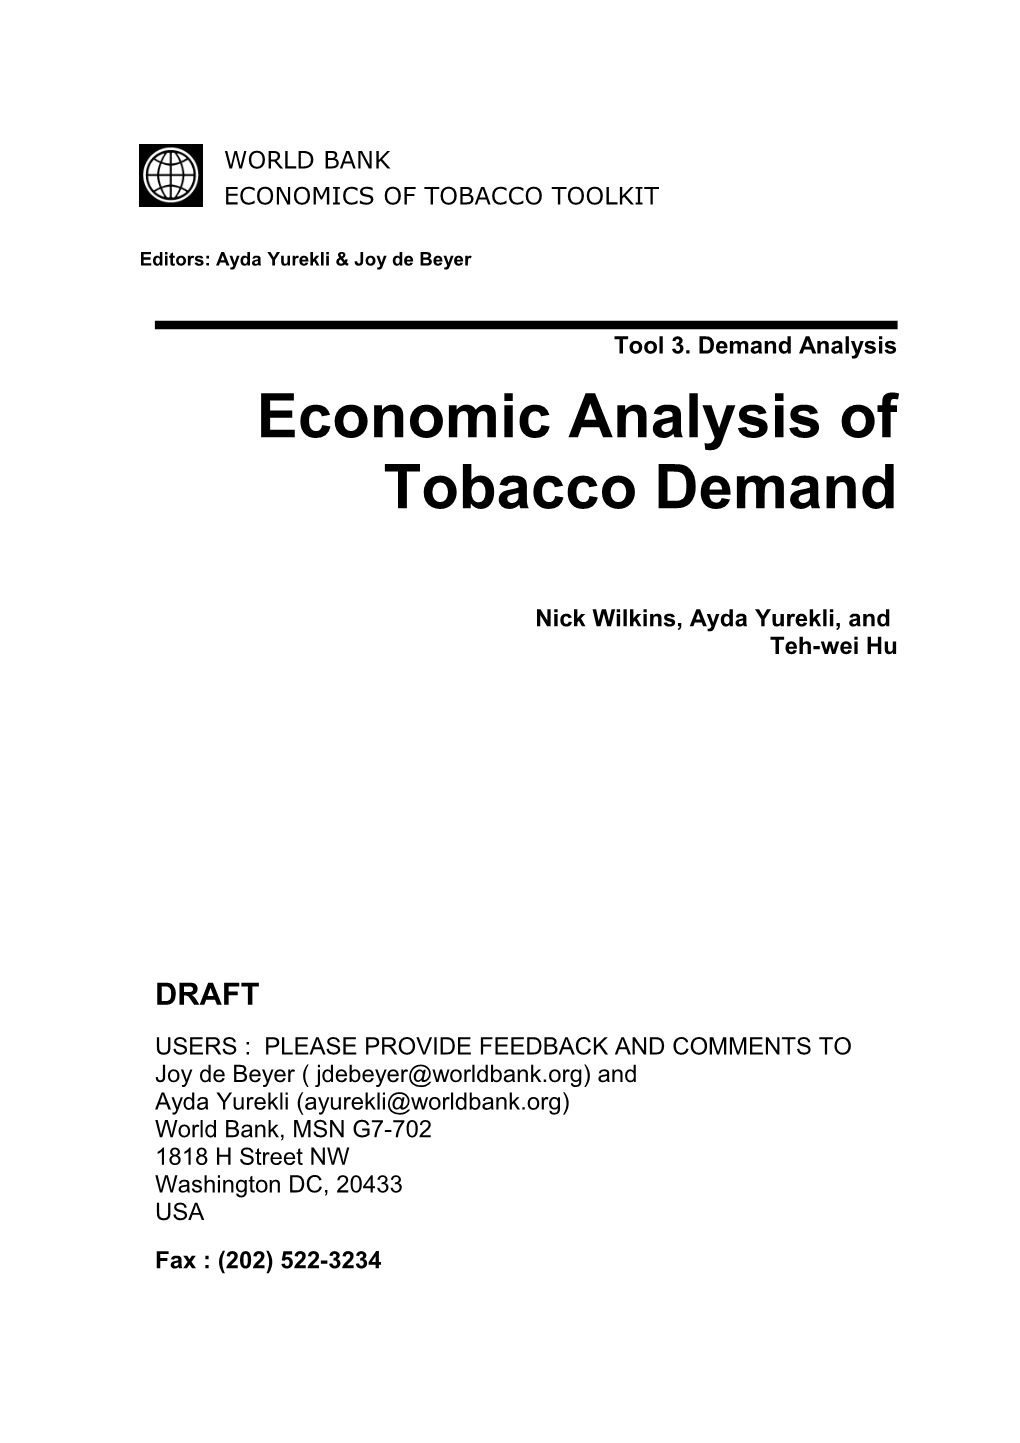 Tool 3. Demand Analysis